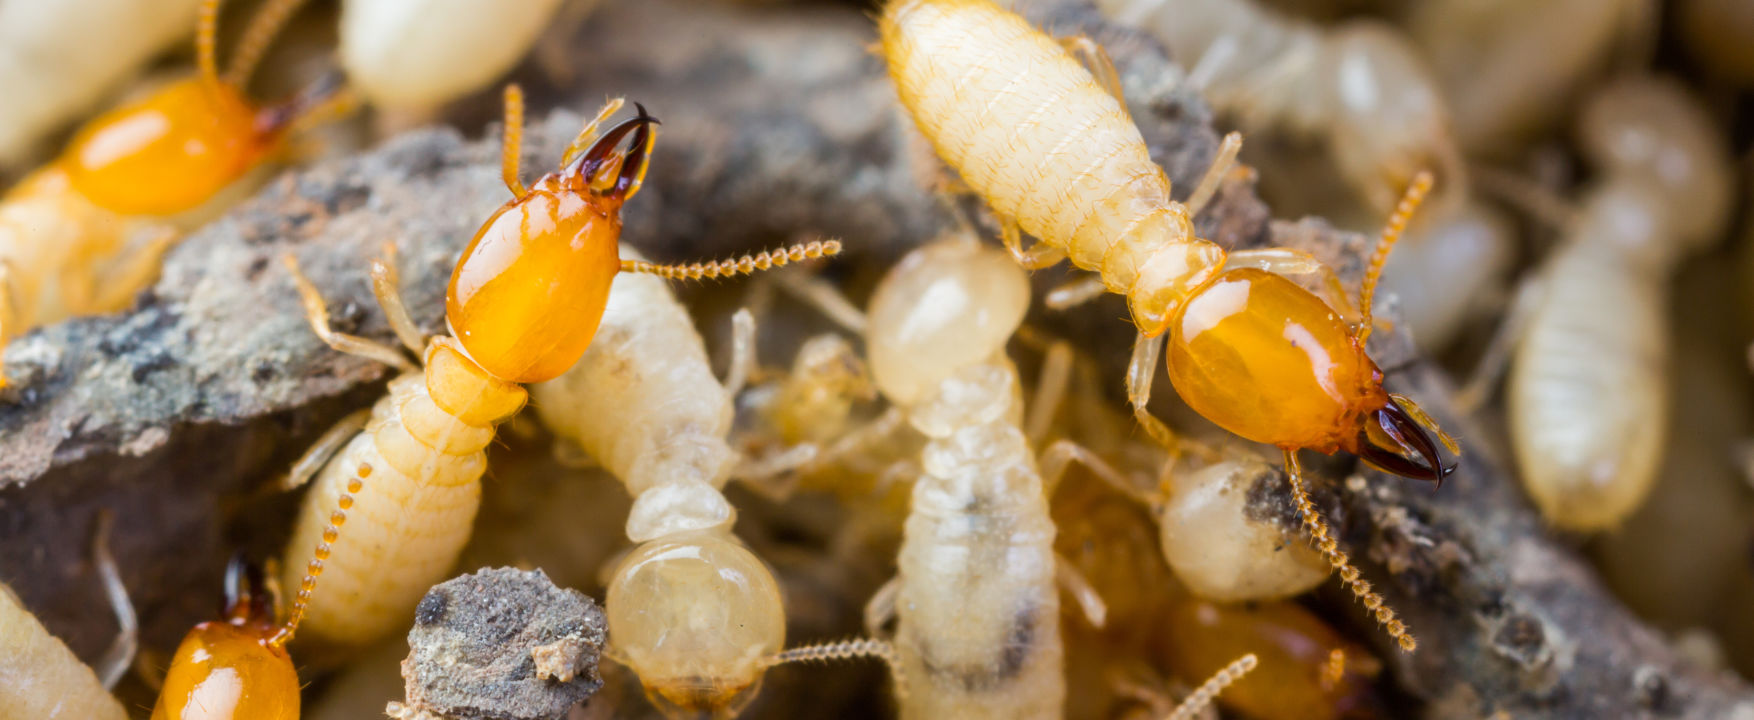 Termite treatment Adelaide - termite inspections